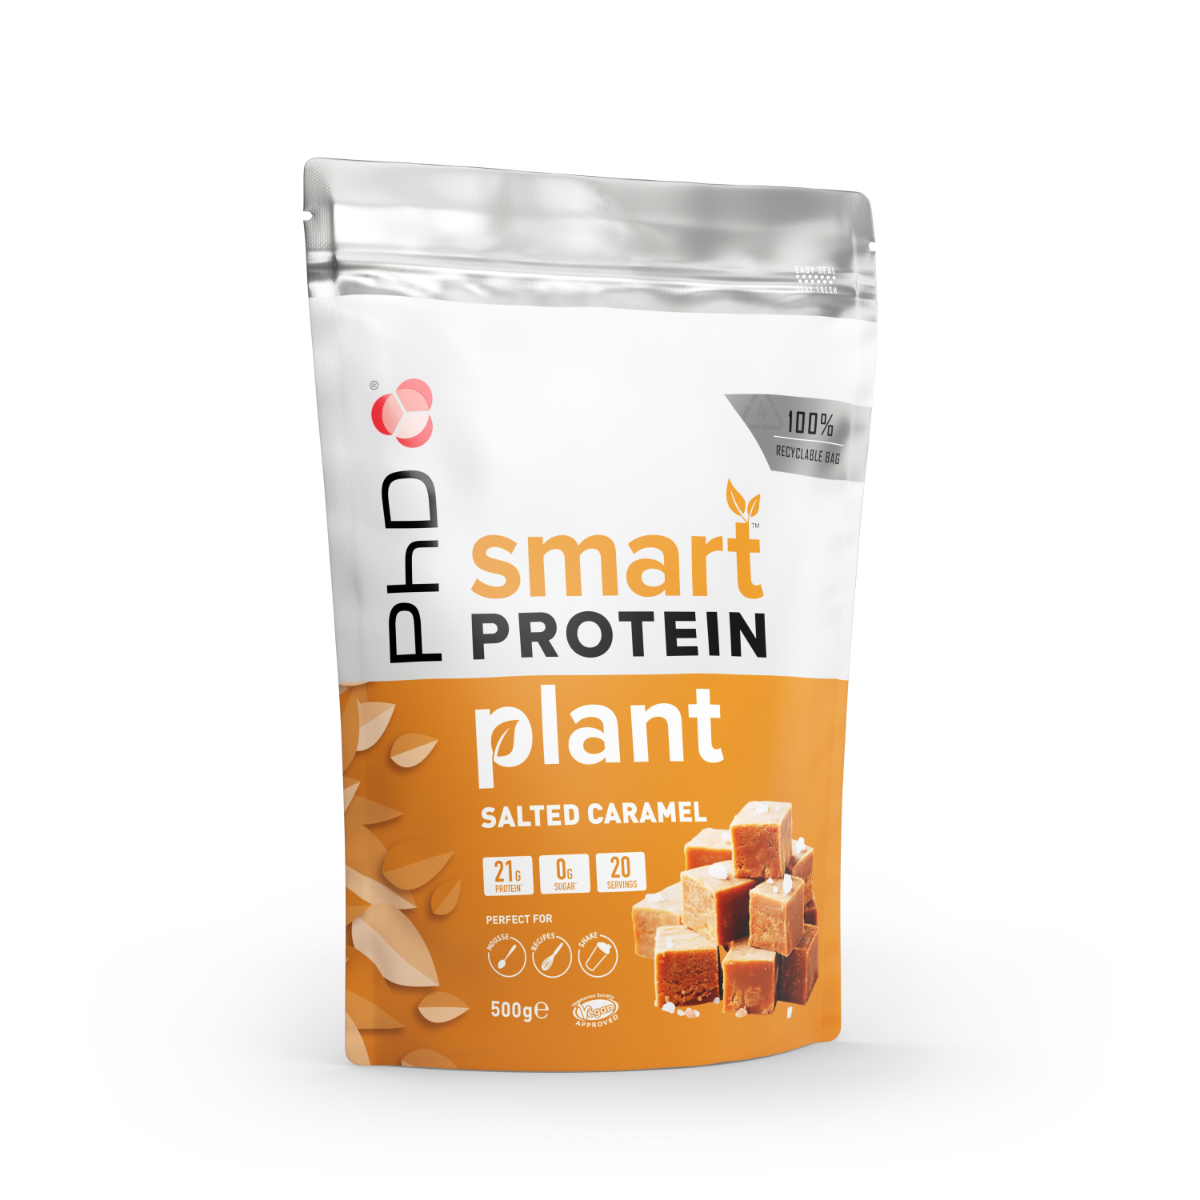 Smart Plant Protein Powder - Salted Caramel